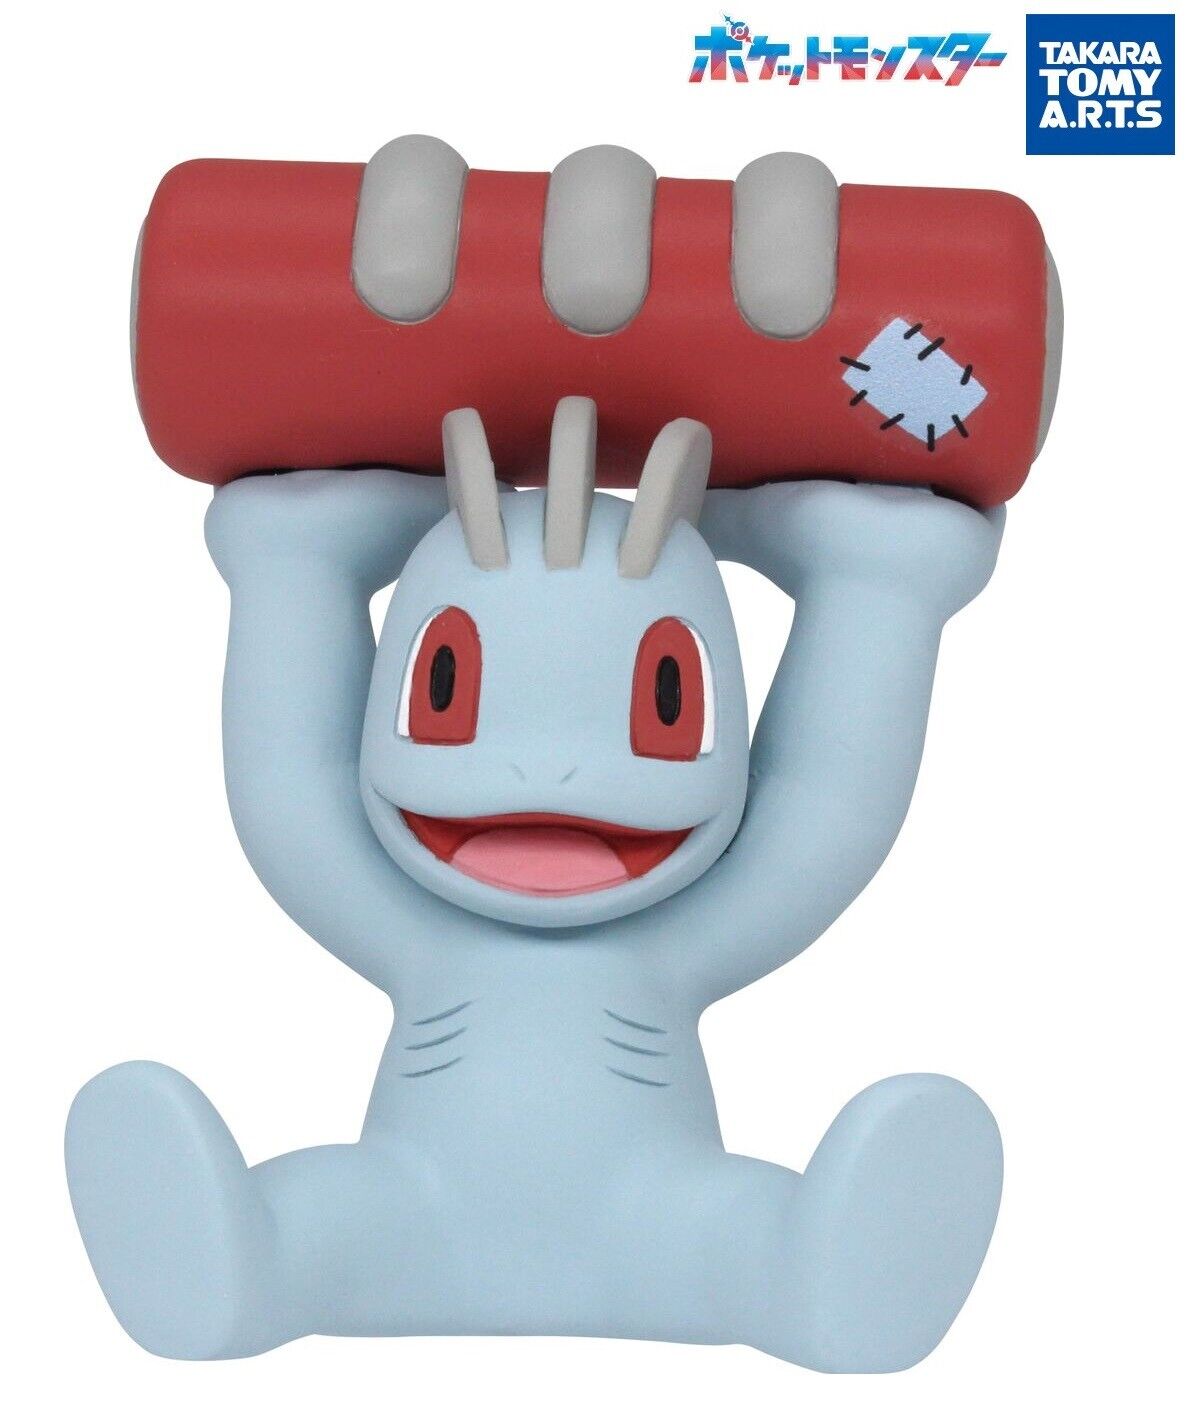 Pokemon at Home! Relaxation Mascot Part 2 Tomy Takara Mini Figure Toy (Machop)